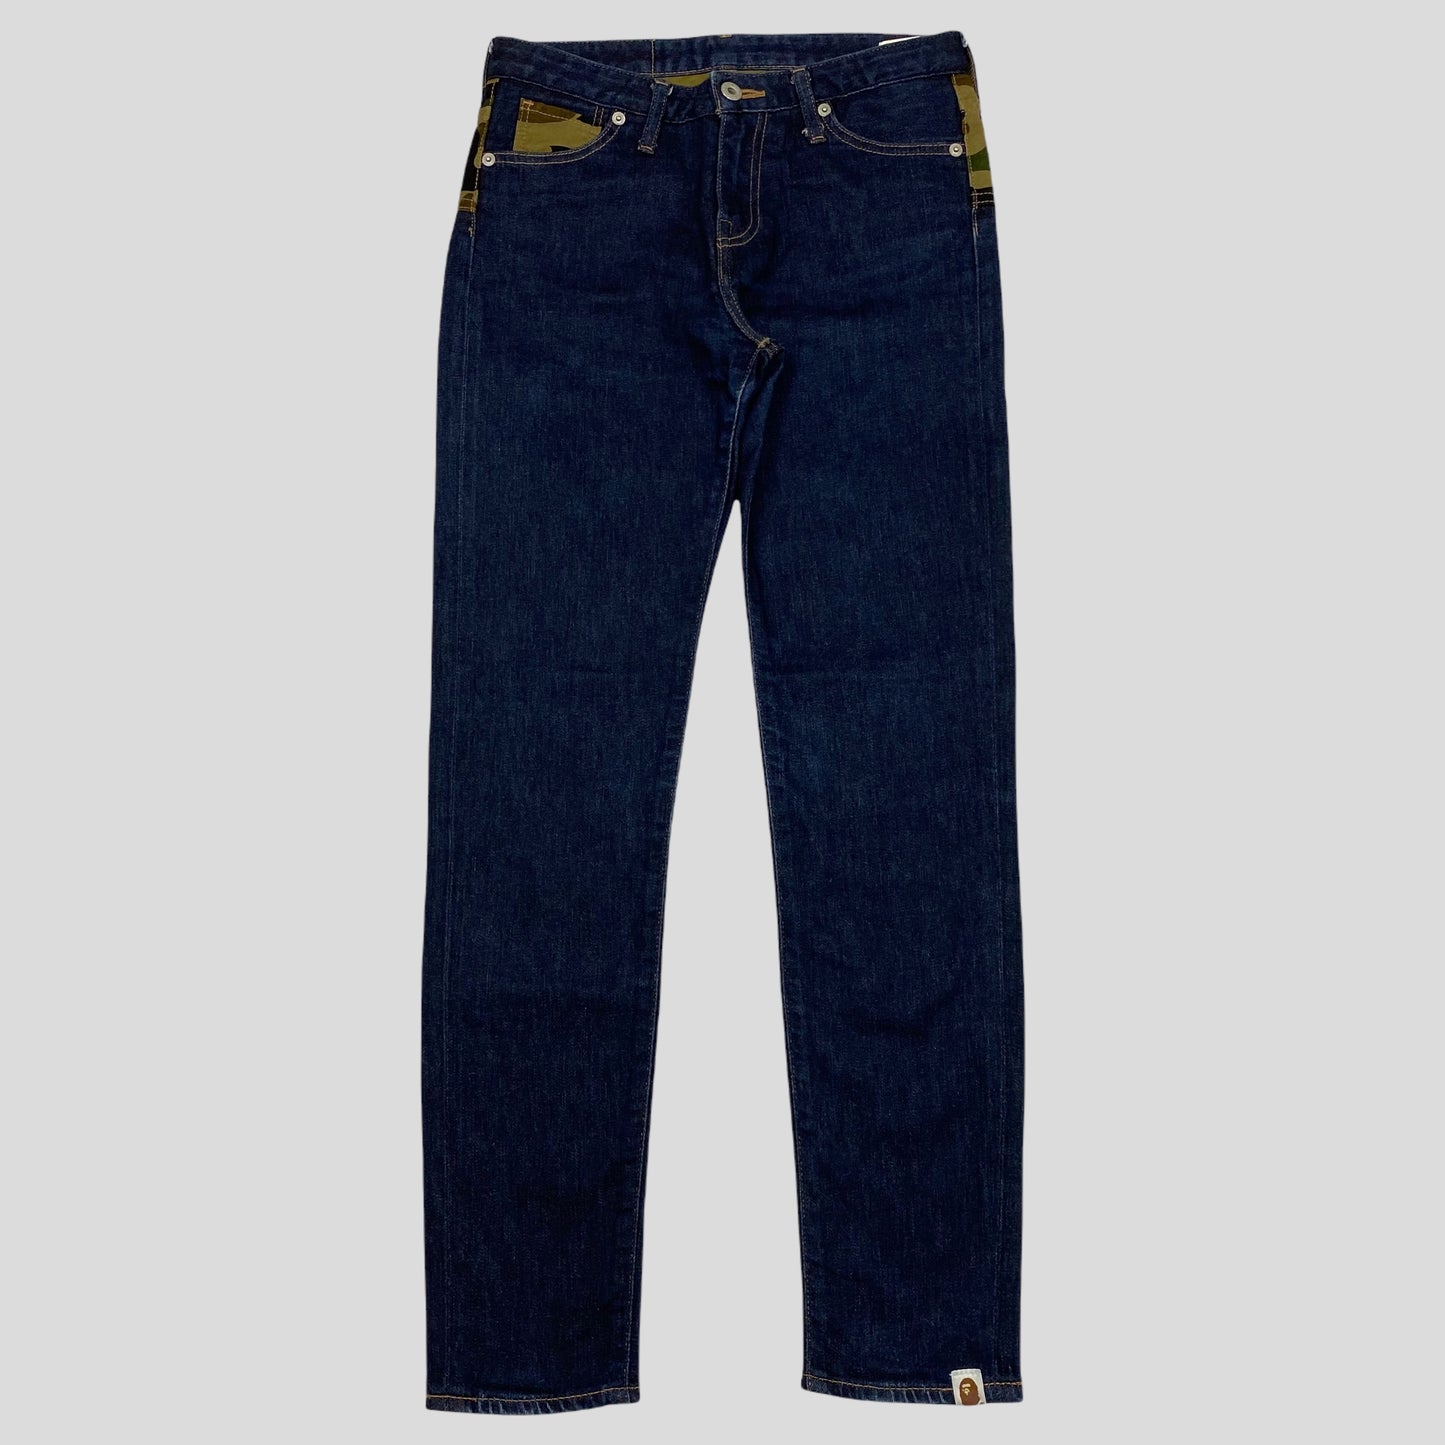 Bape Sta 1st Camo Jeans - W28